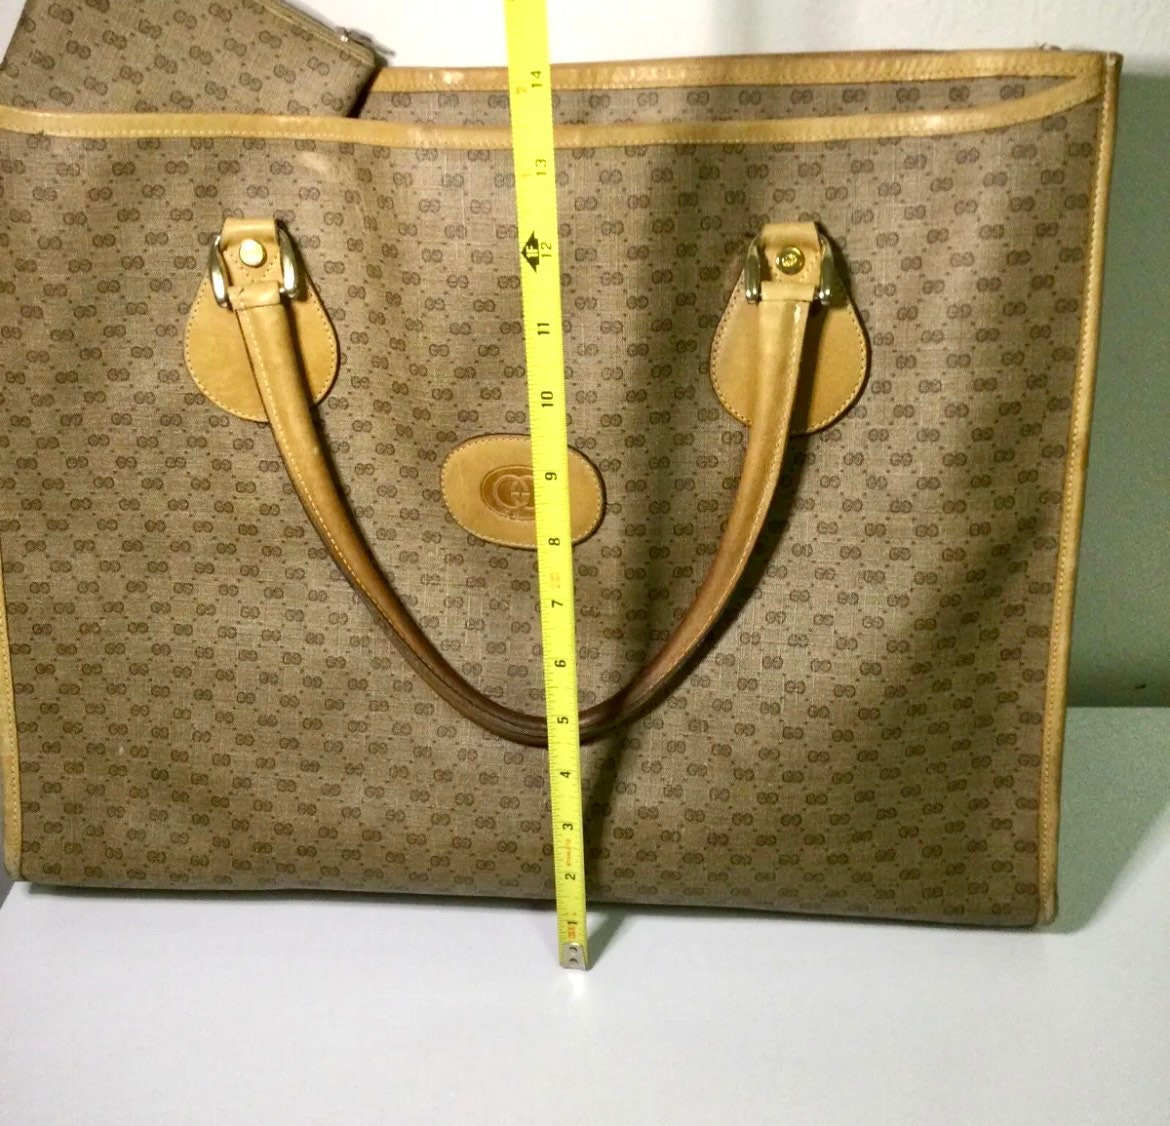 Gucci GG Monogram Tote Travel Bag